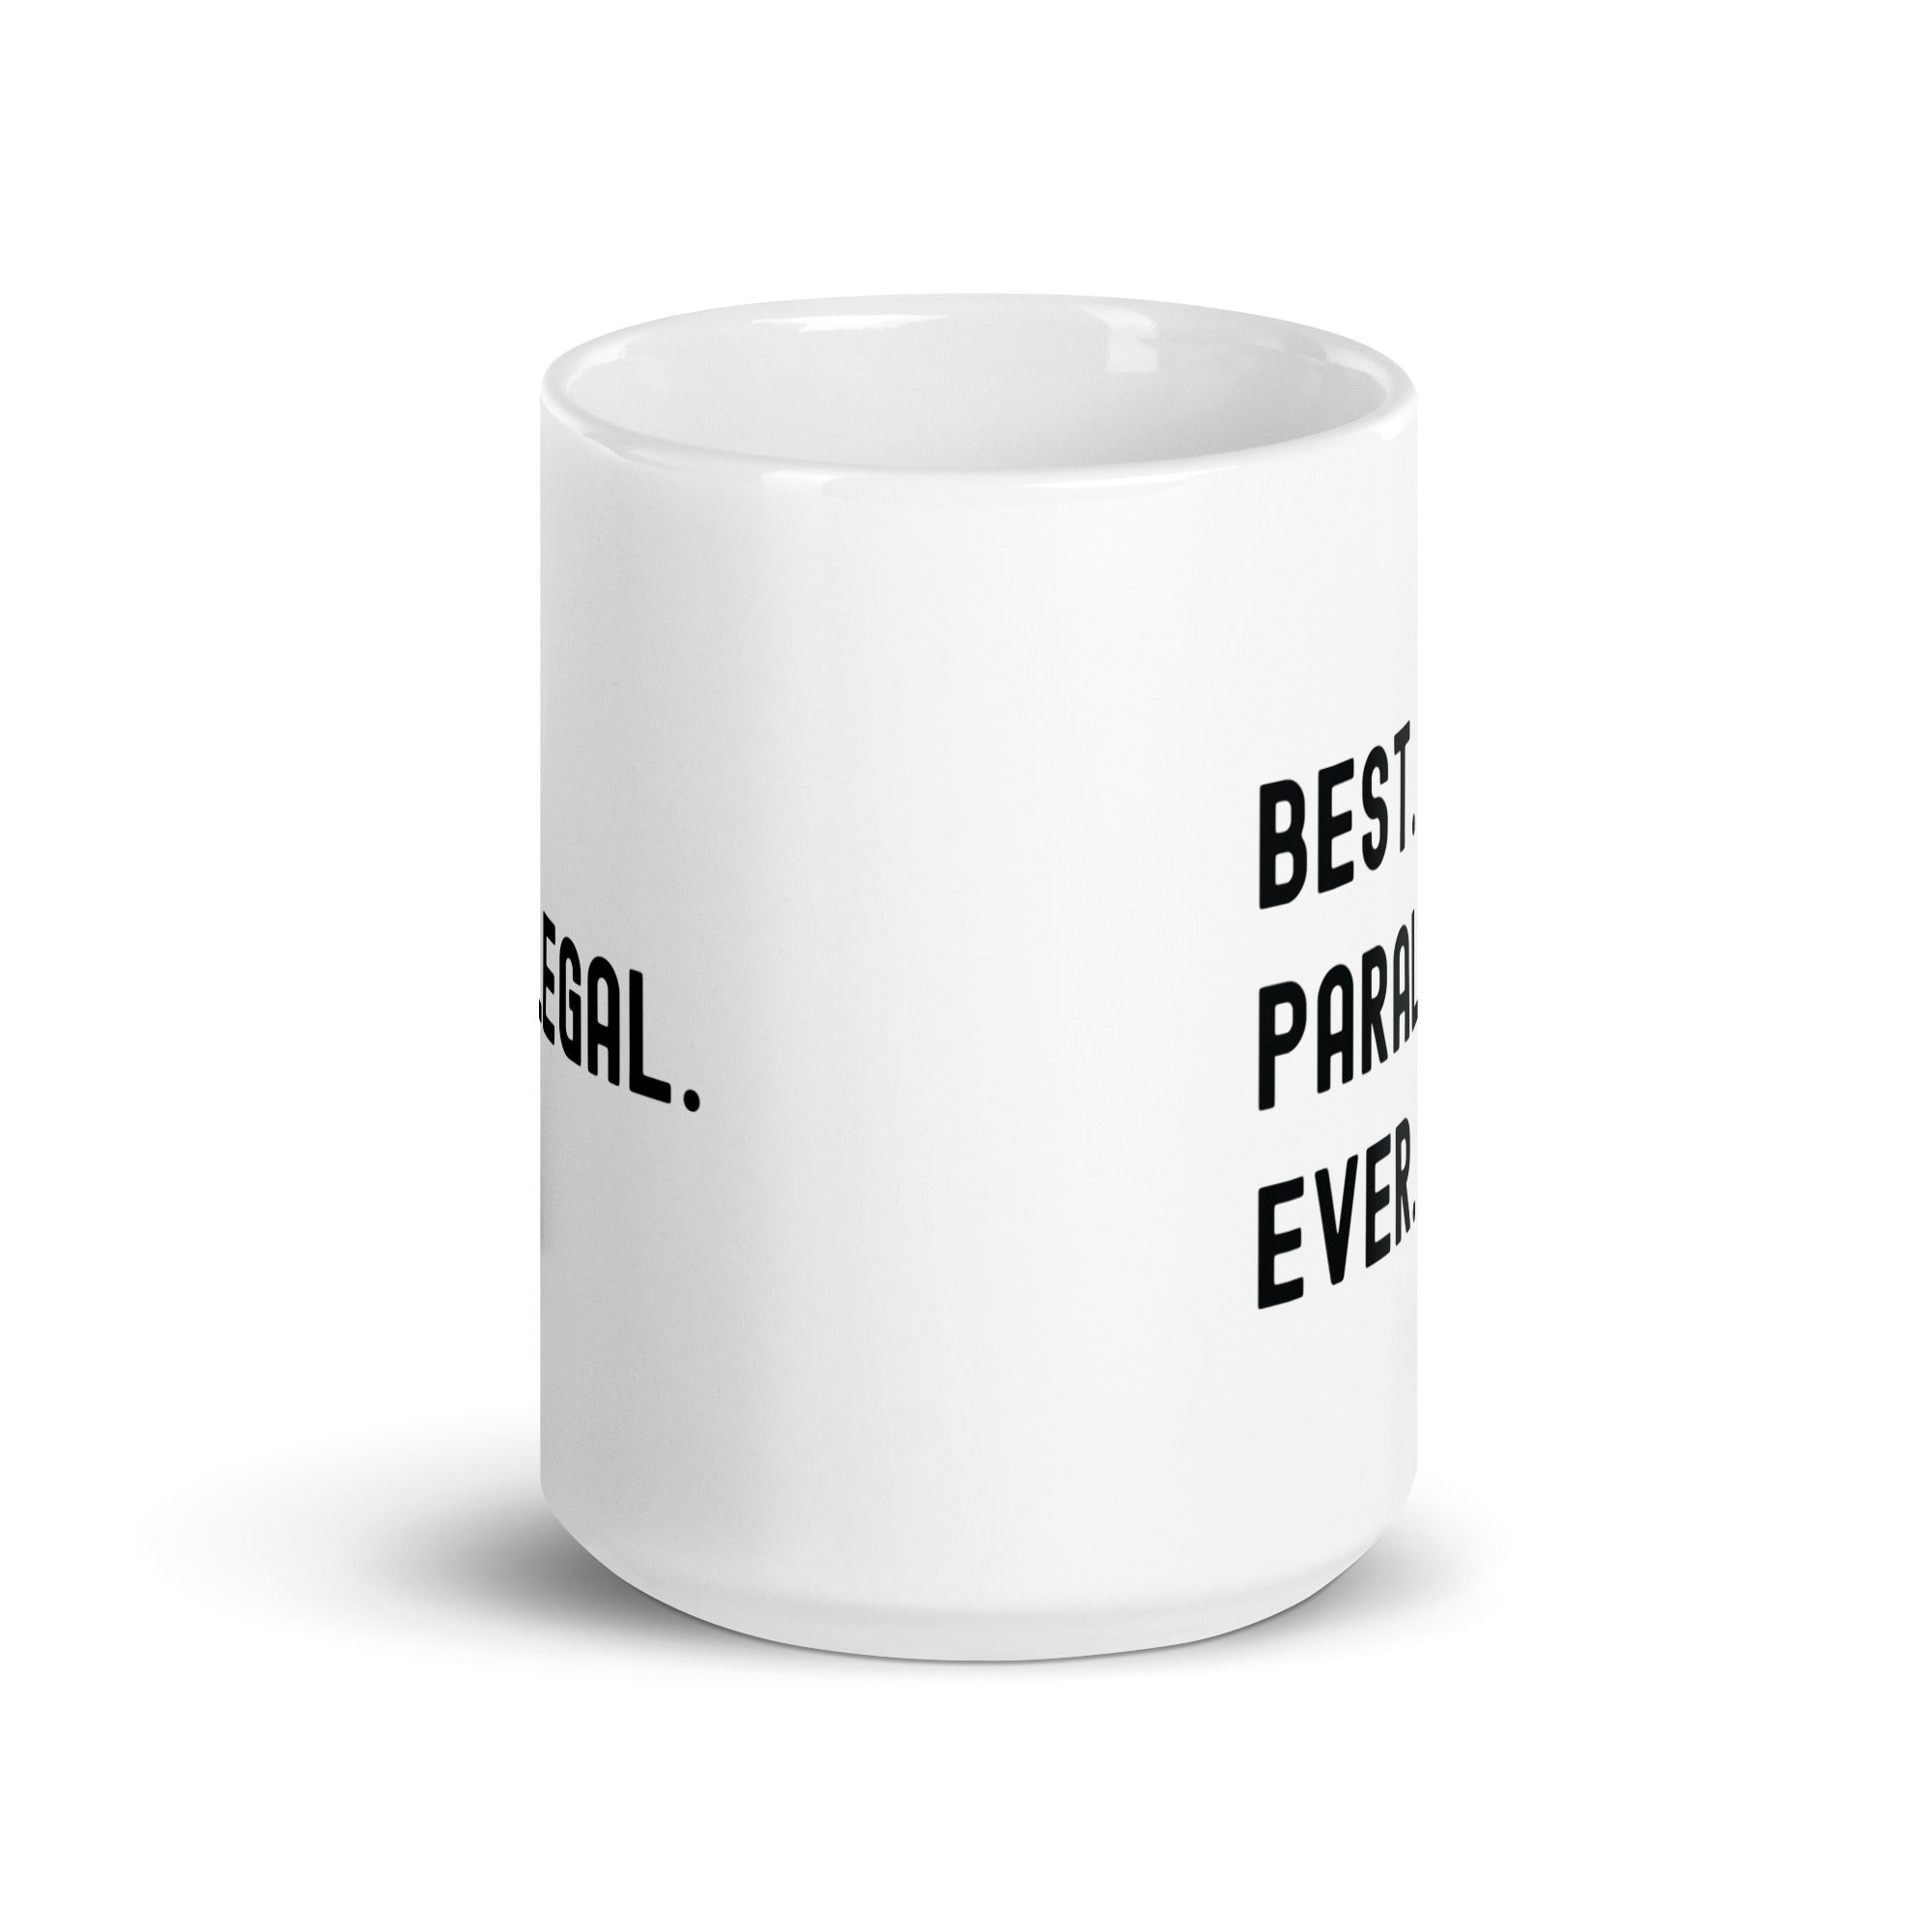 White glossy mug | Best. Paralegal. Ever.